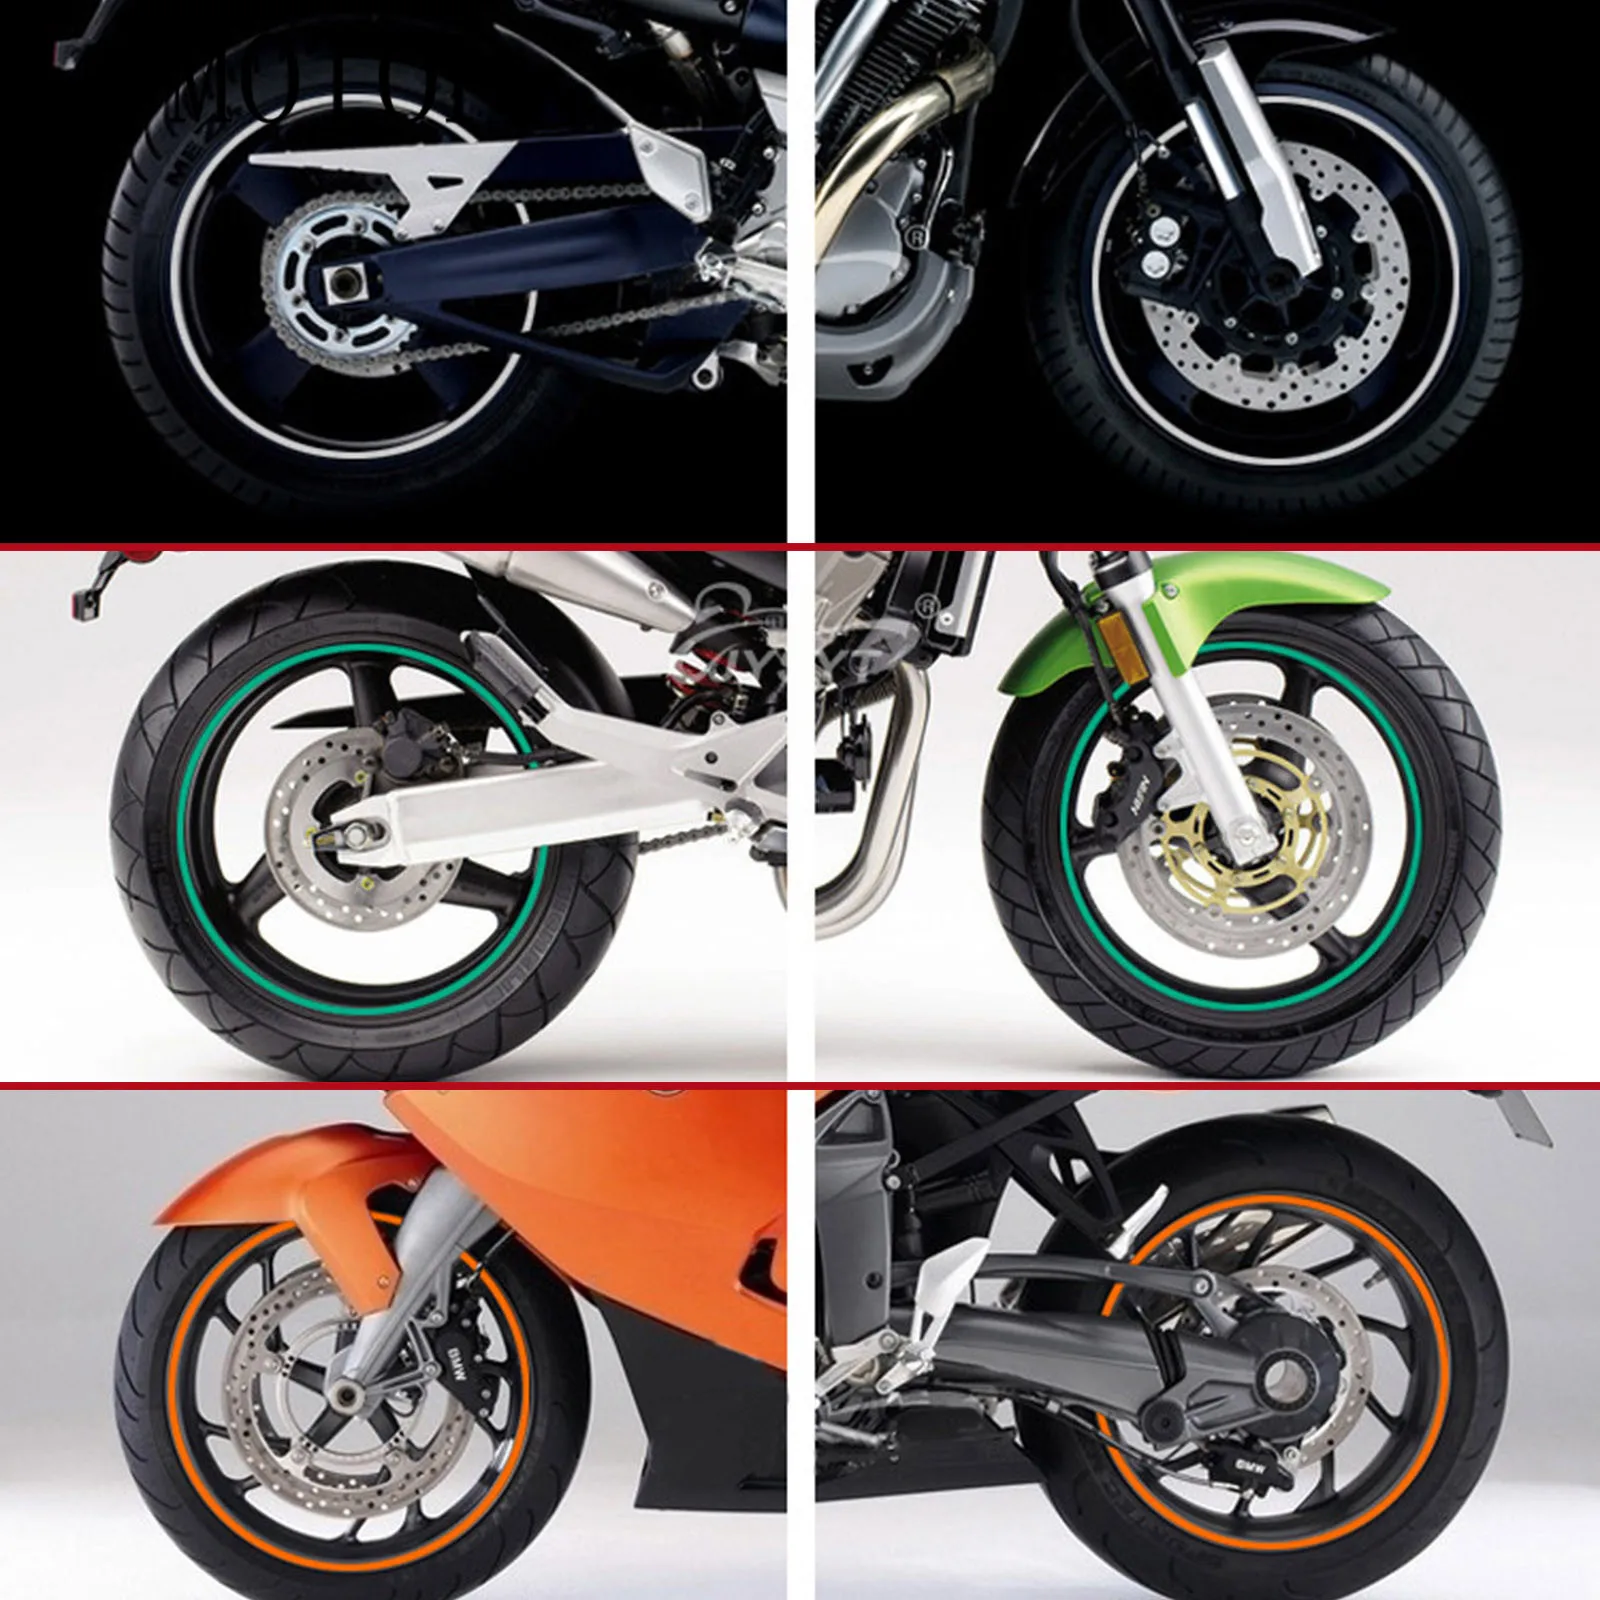 

Wheel Sticker Reflective Rim Stripe Tape Bike Motorcycle Stickers For Yamaha XMAX 125 250 400 300 1700 1200 125 VMAX Tenere 700